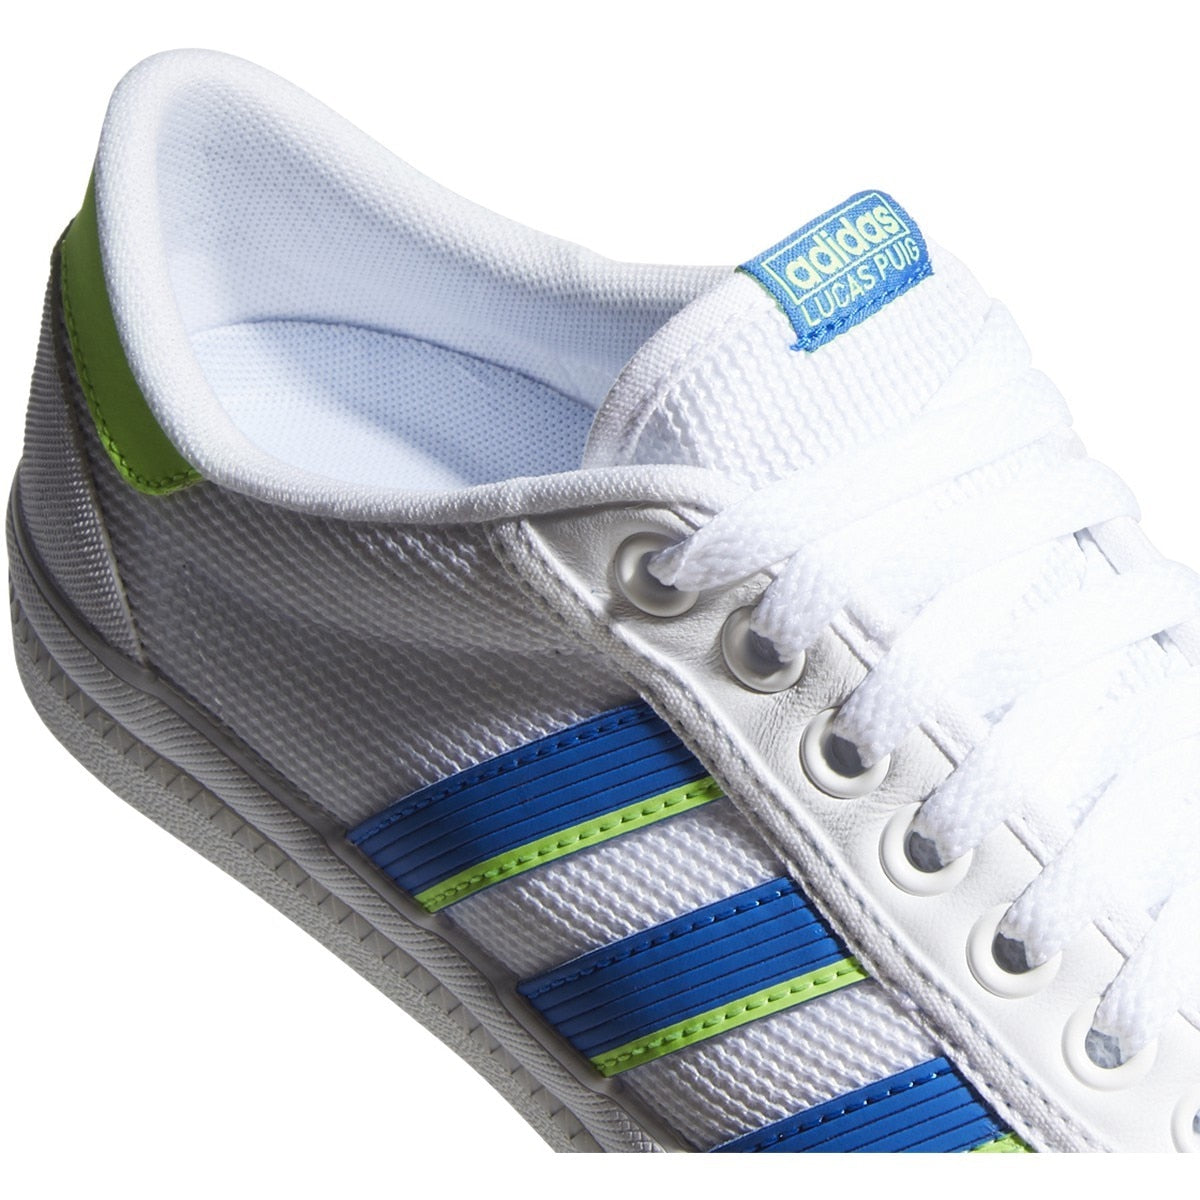 Adidas Lucas Premiere Skateboard Shoes - White/Glory Blue/Signal Green